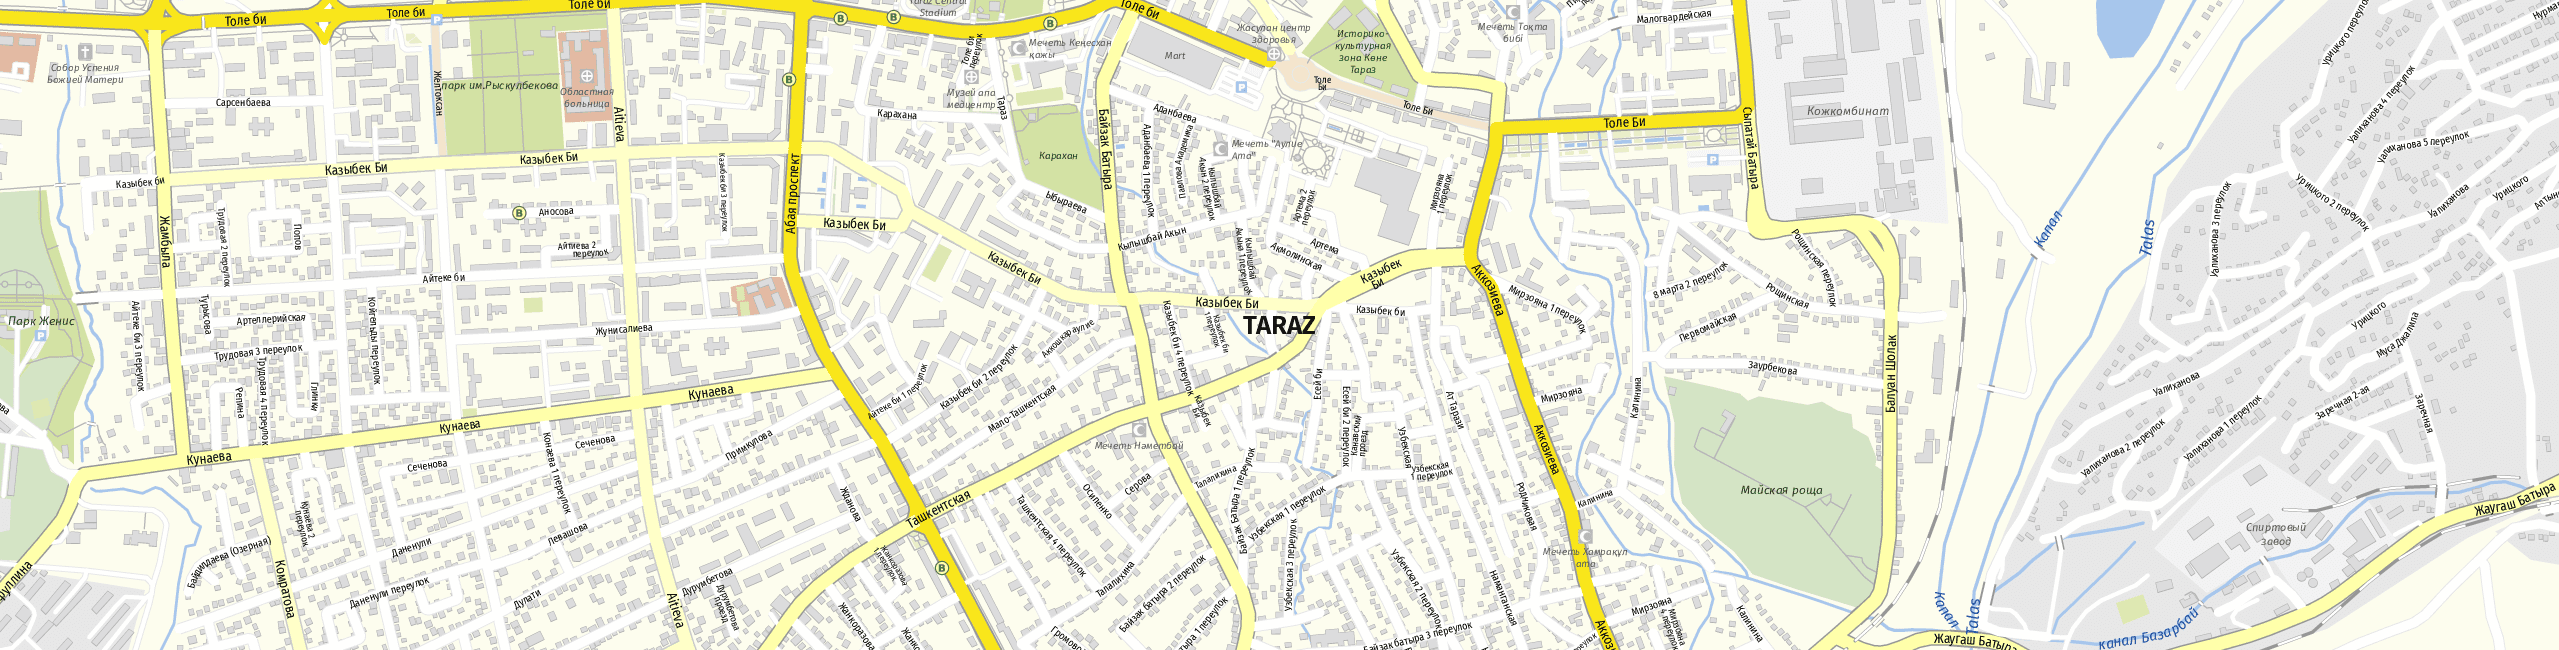 Stadtplan Taras zum Downloaden.